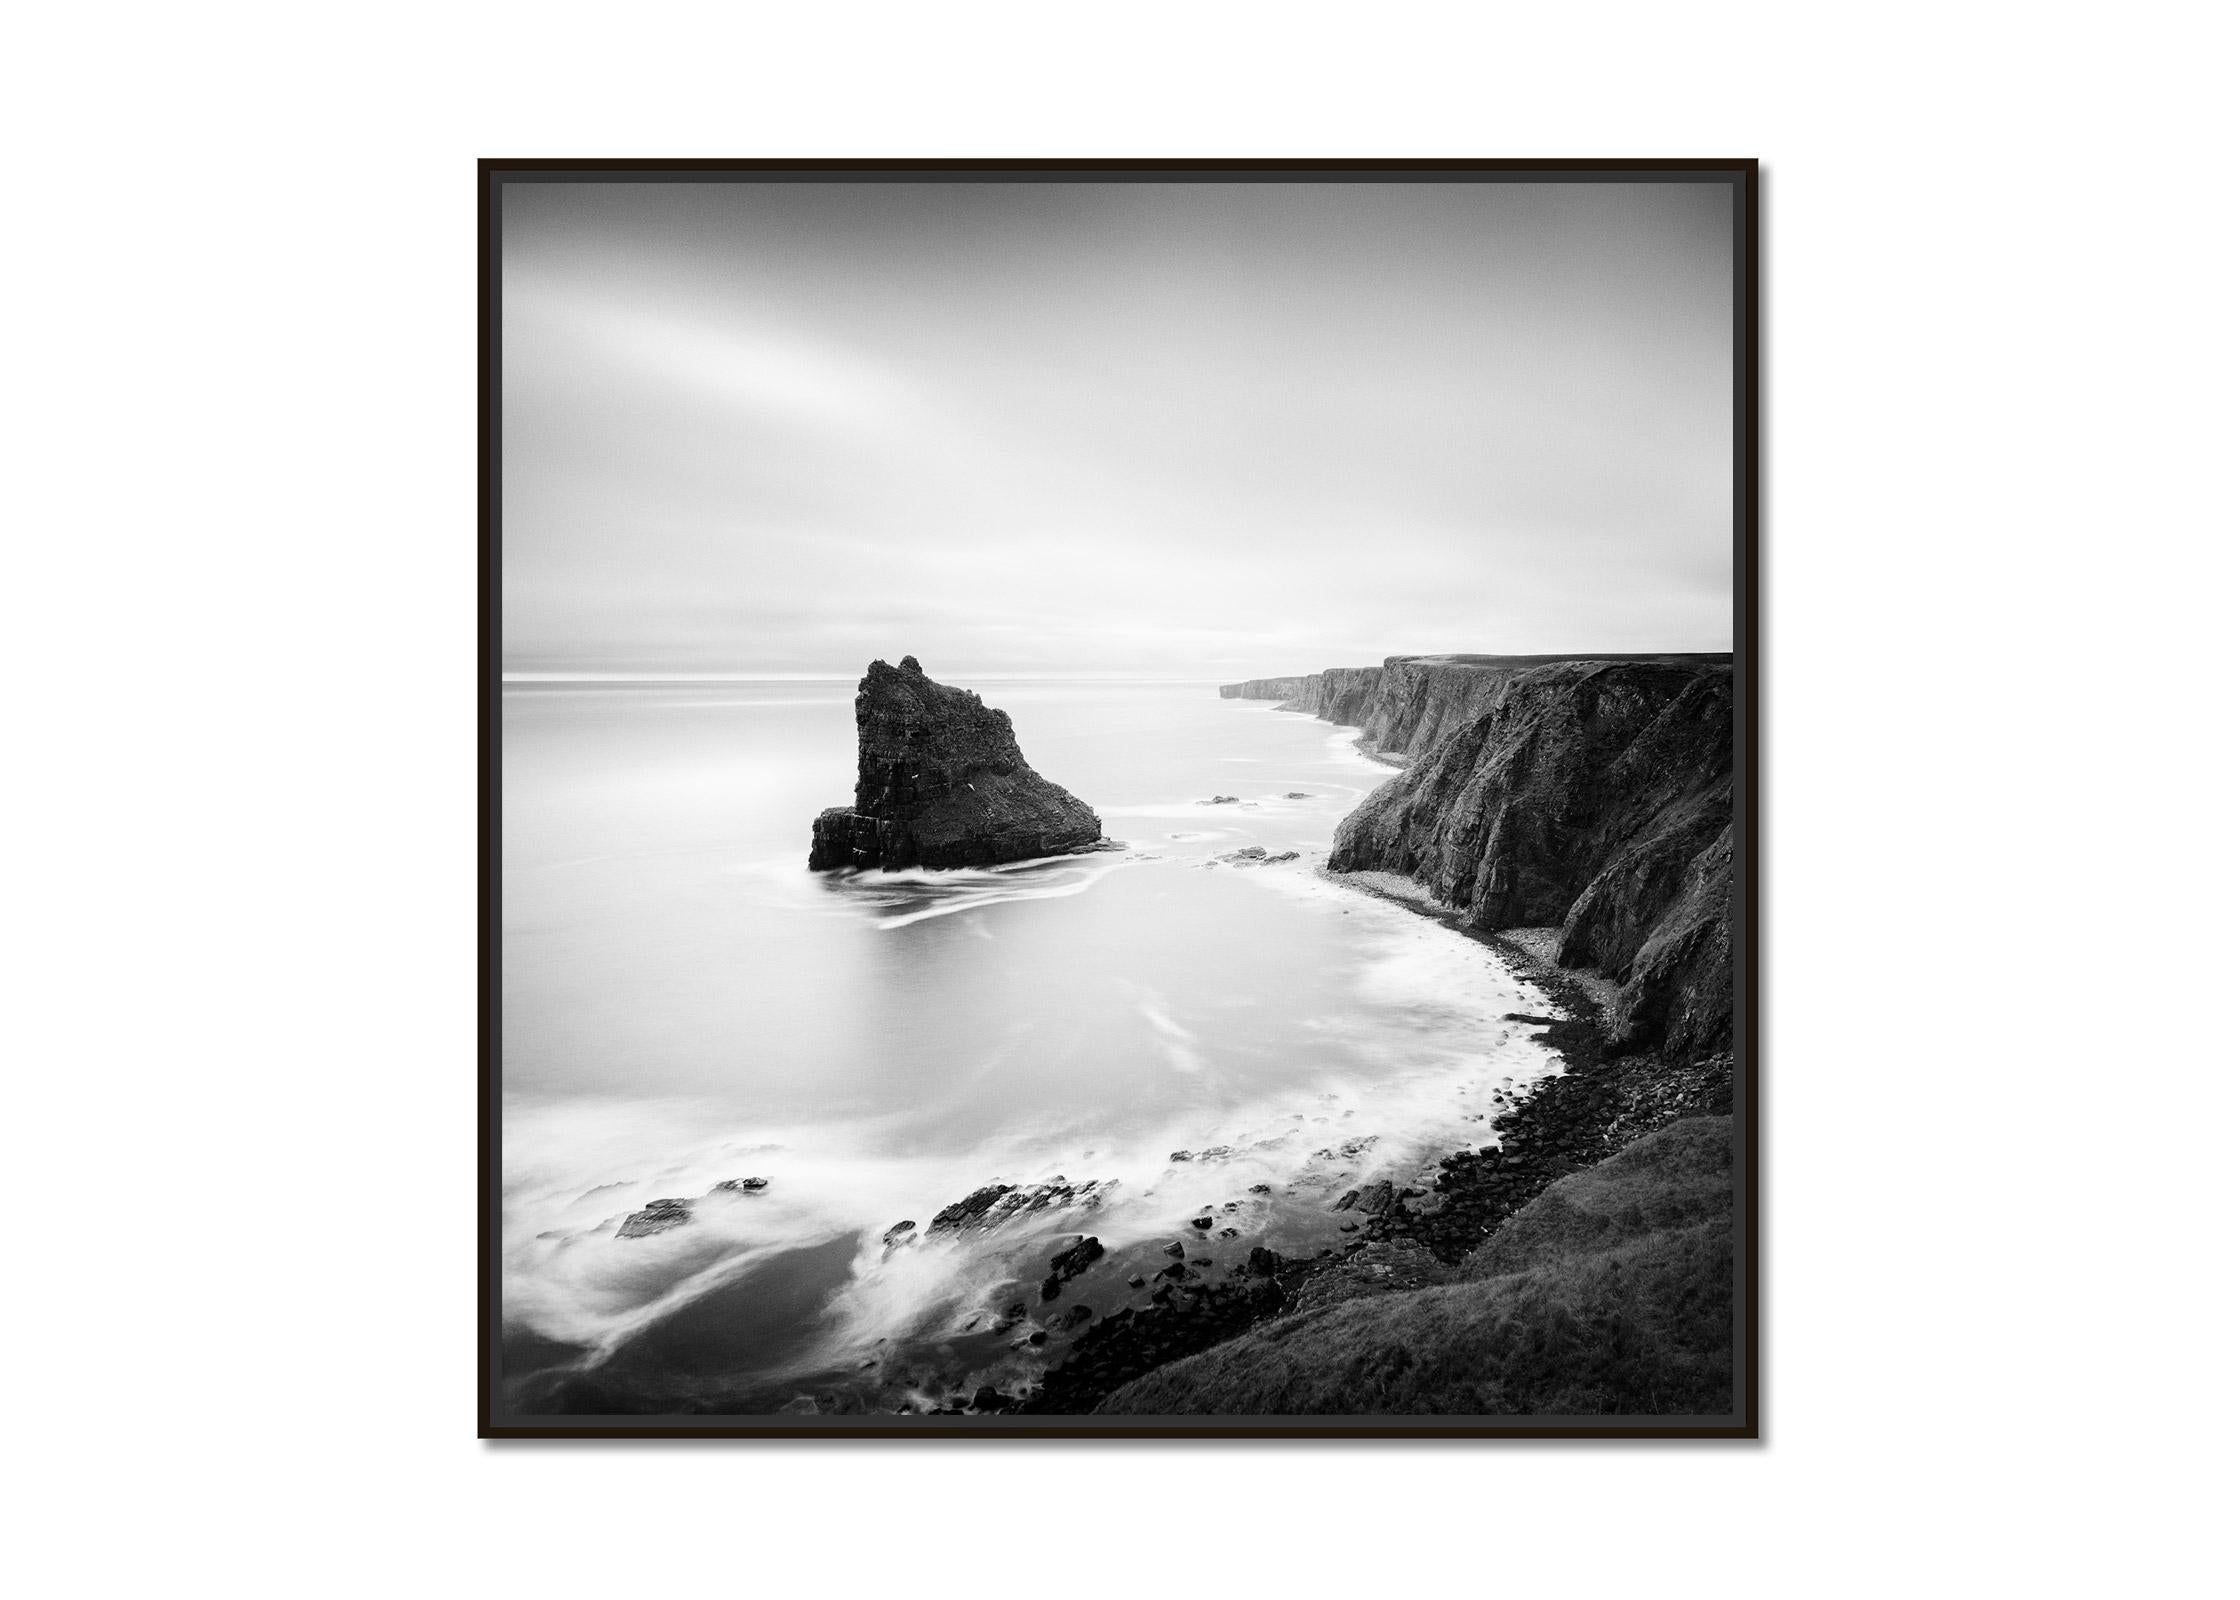 Surreal Moment, scottish coastline, black and white art photography, landscape - Photograph by Gerald Berghammer, Ina Forstinger